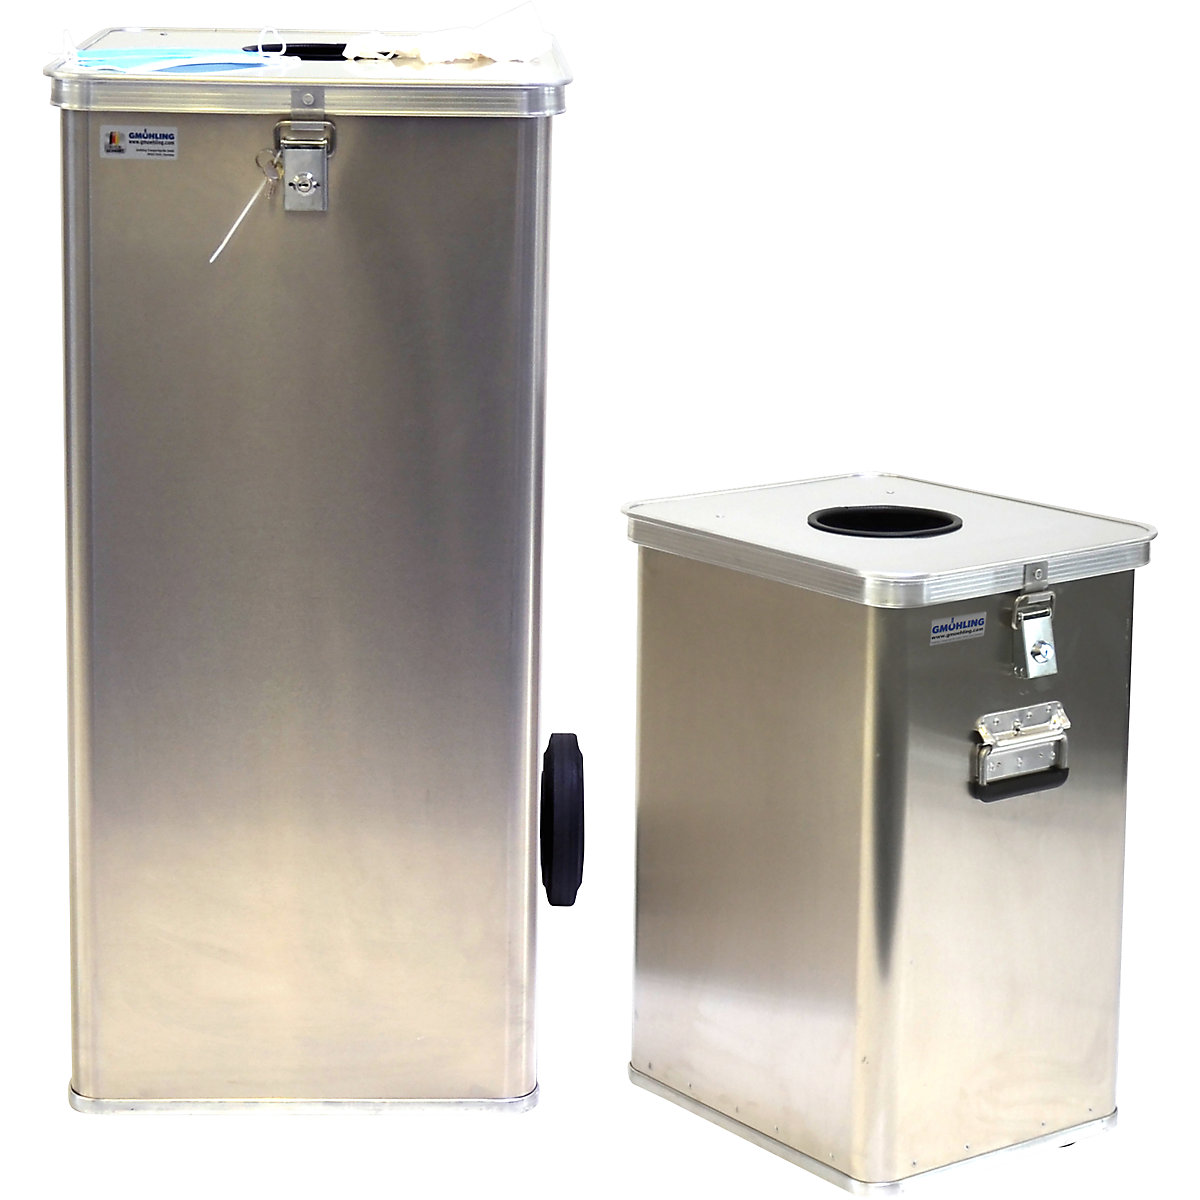 Contentor de lixo/recipiente para resíduos G®-DROP – Gmöhling (Imagem do produto 3)-2